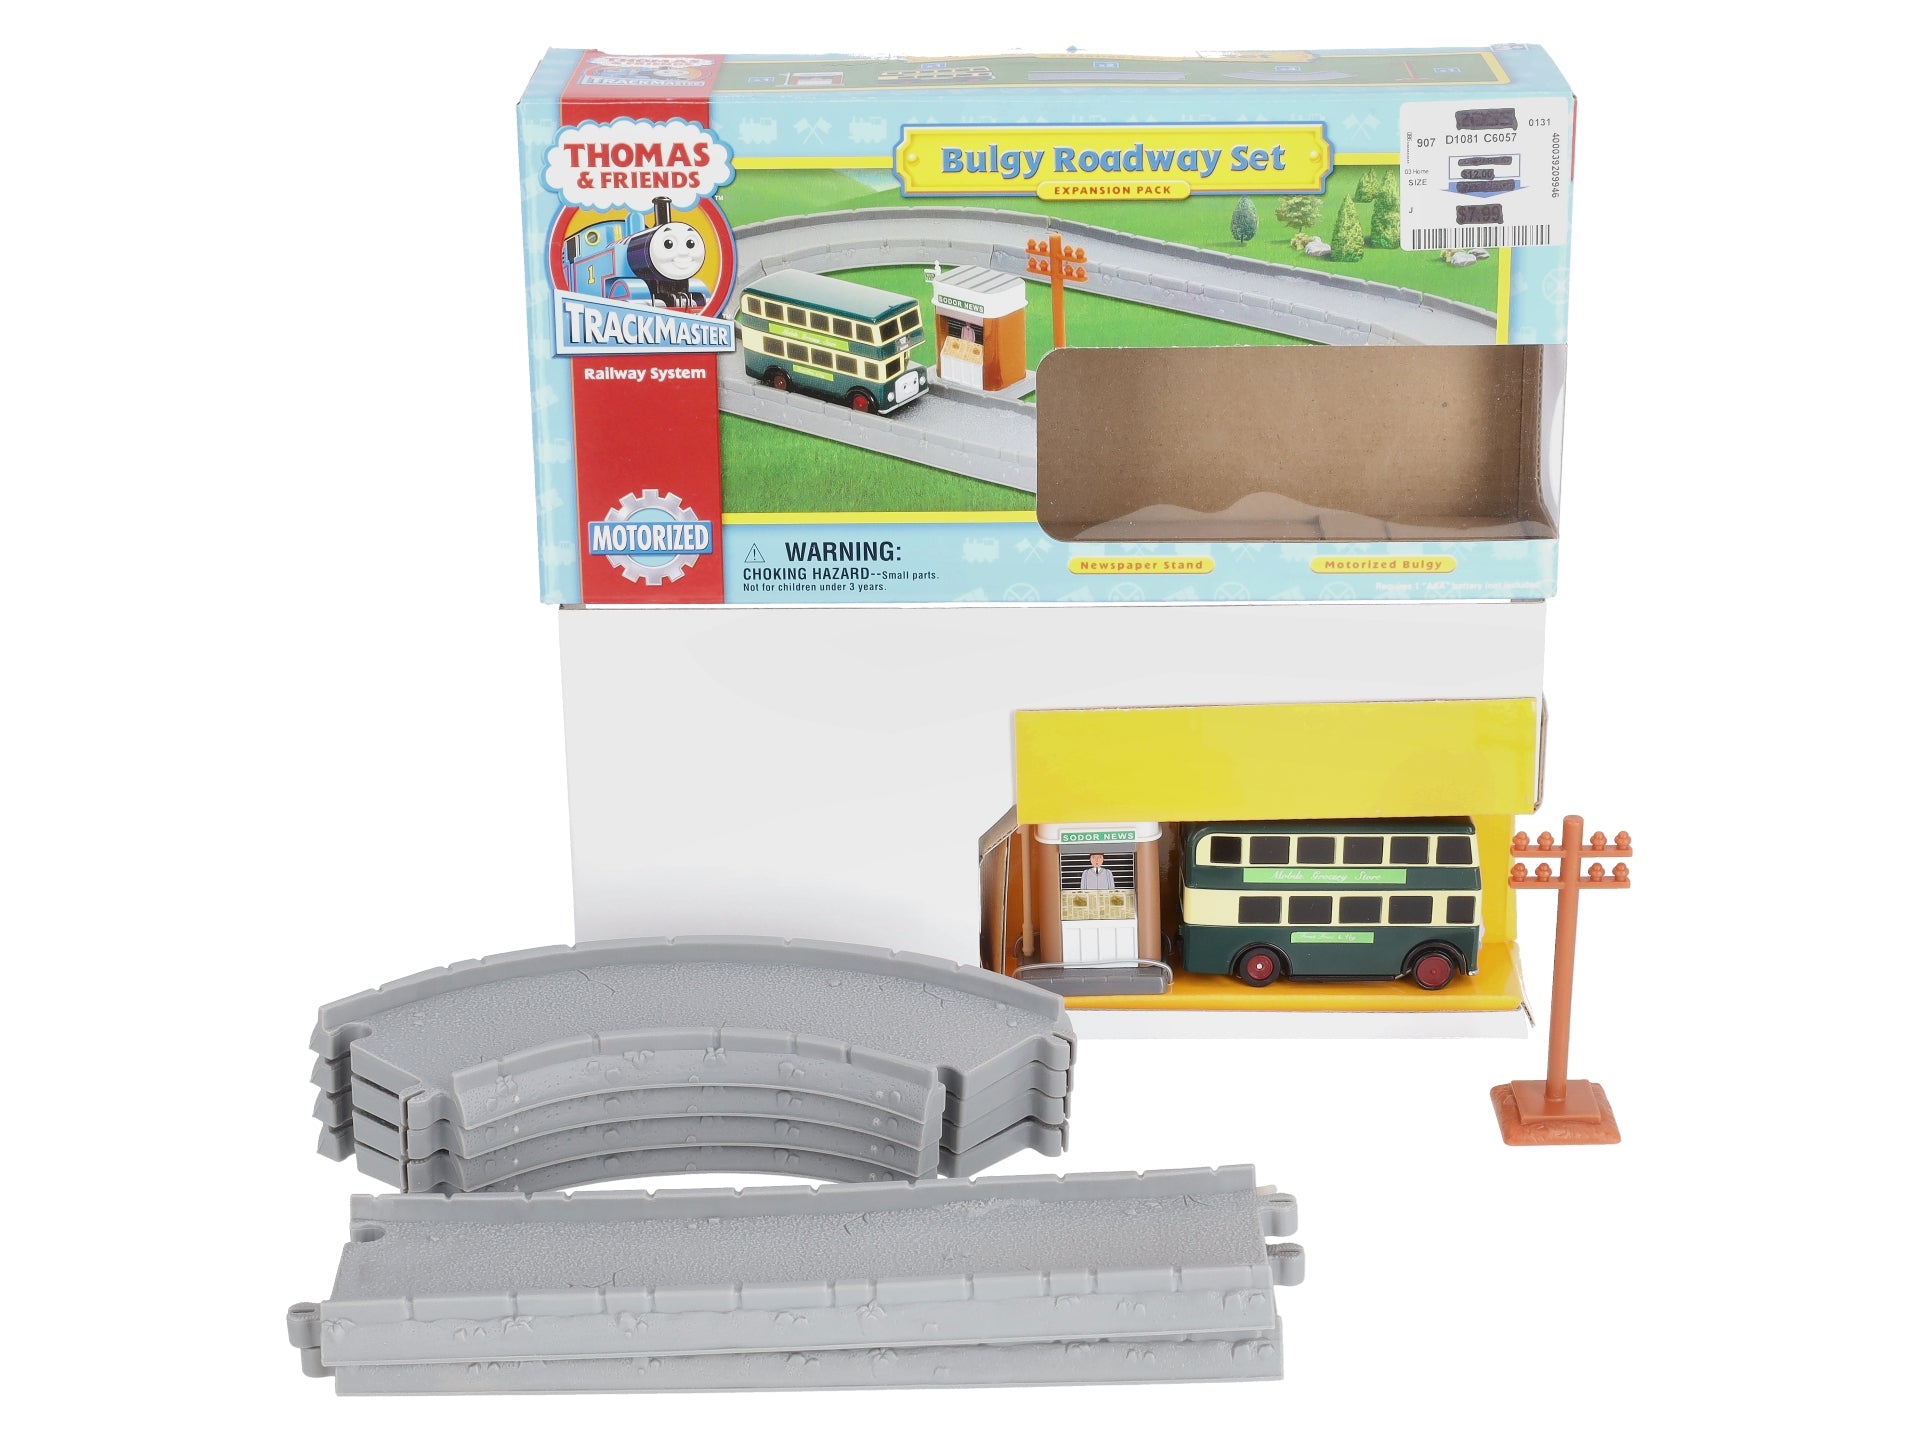 HiT Toy Co. 64052 Thomas & Friends Bulgy Roadway Set Expansion Pack LN/Box